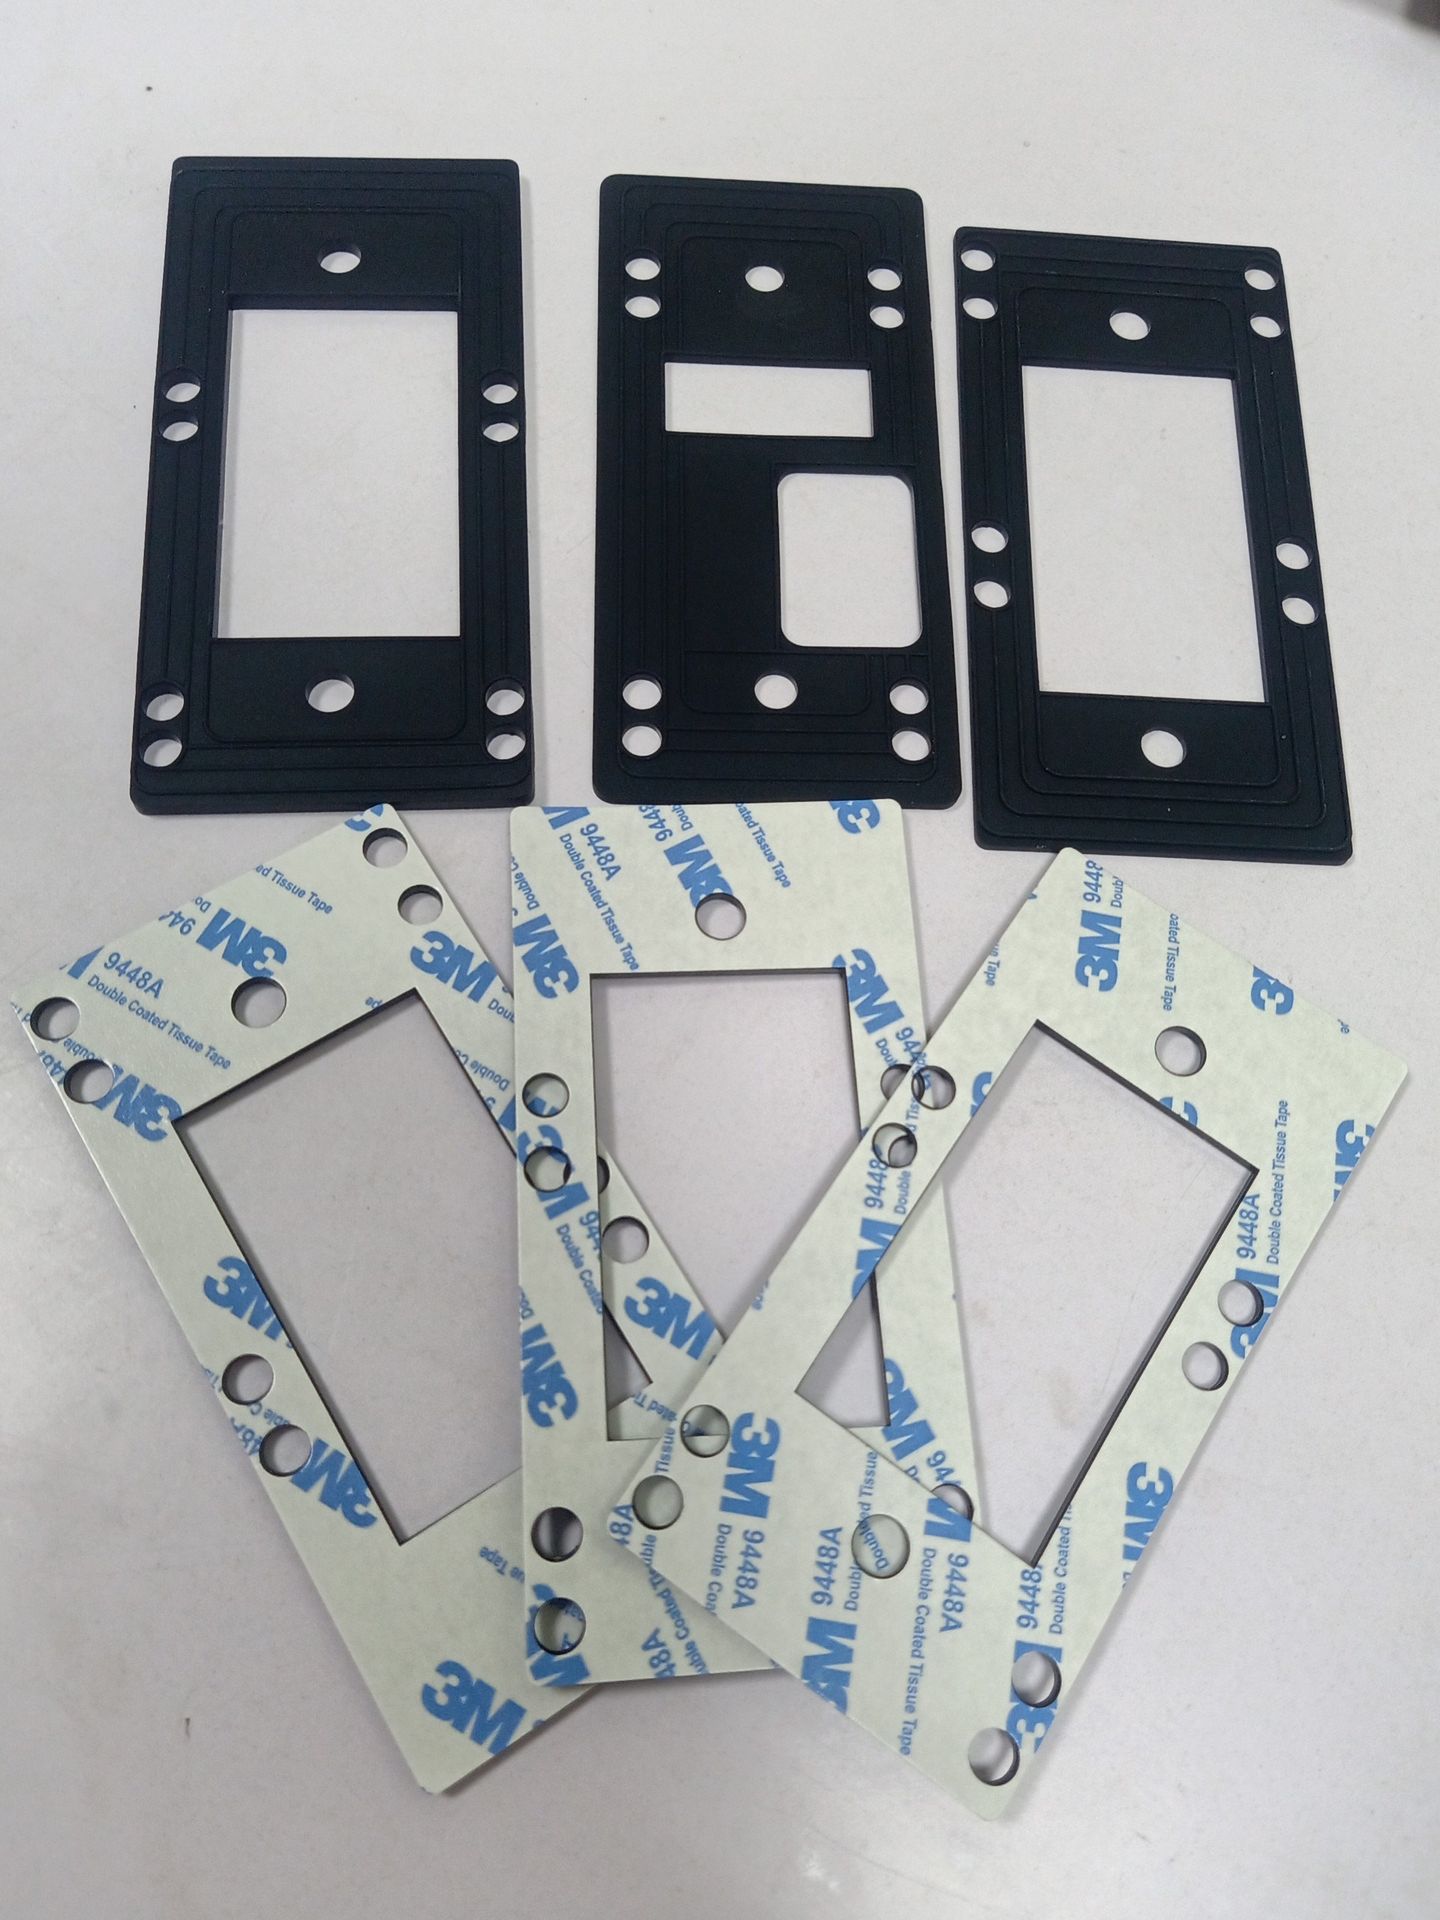 3M double side adhesive waterproof black rubber pad